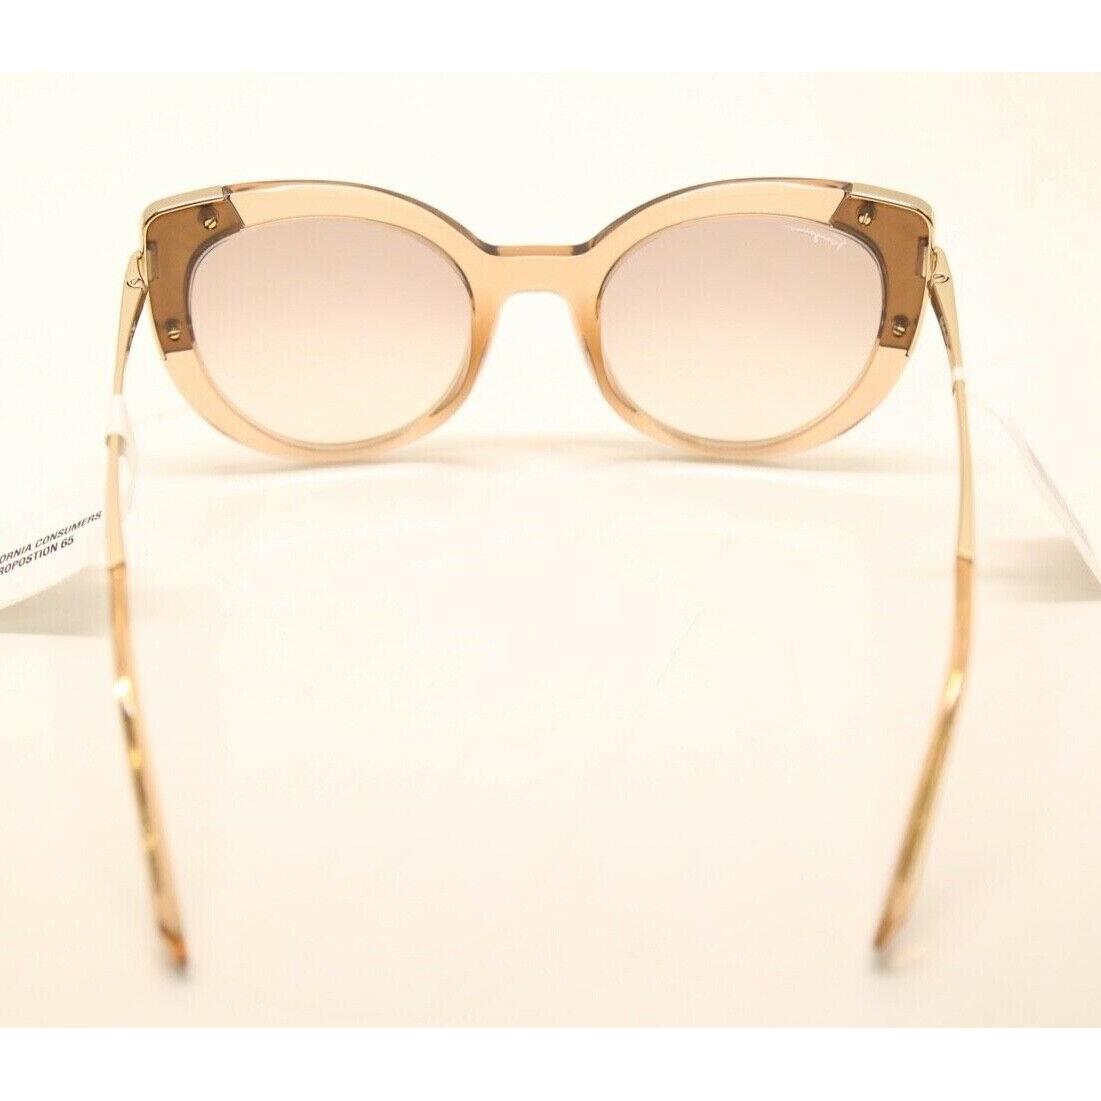 Salvatore Ferragamo sunglasses  - Nude Frame, Brown Lens 2